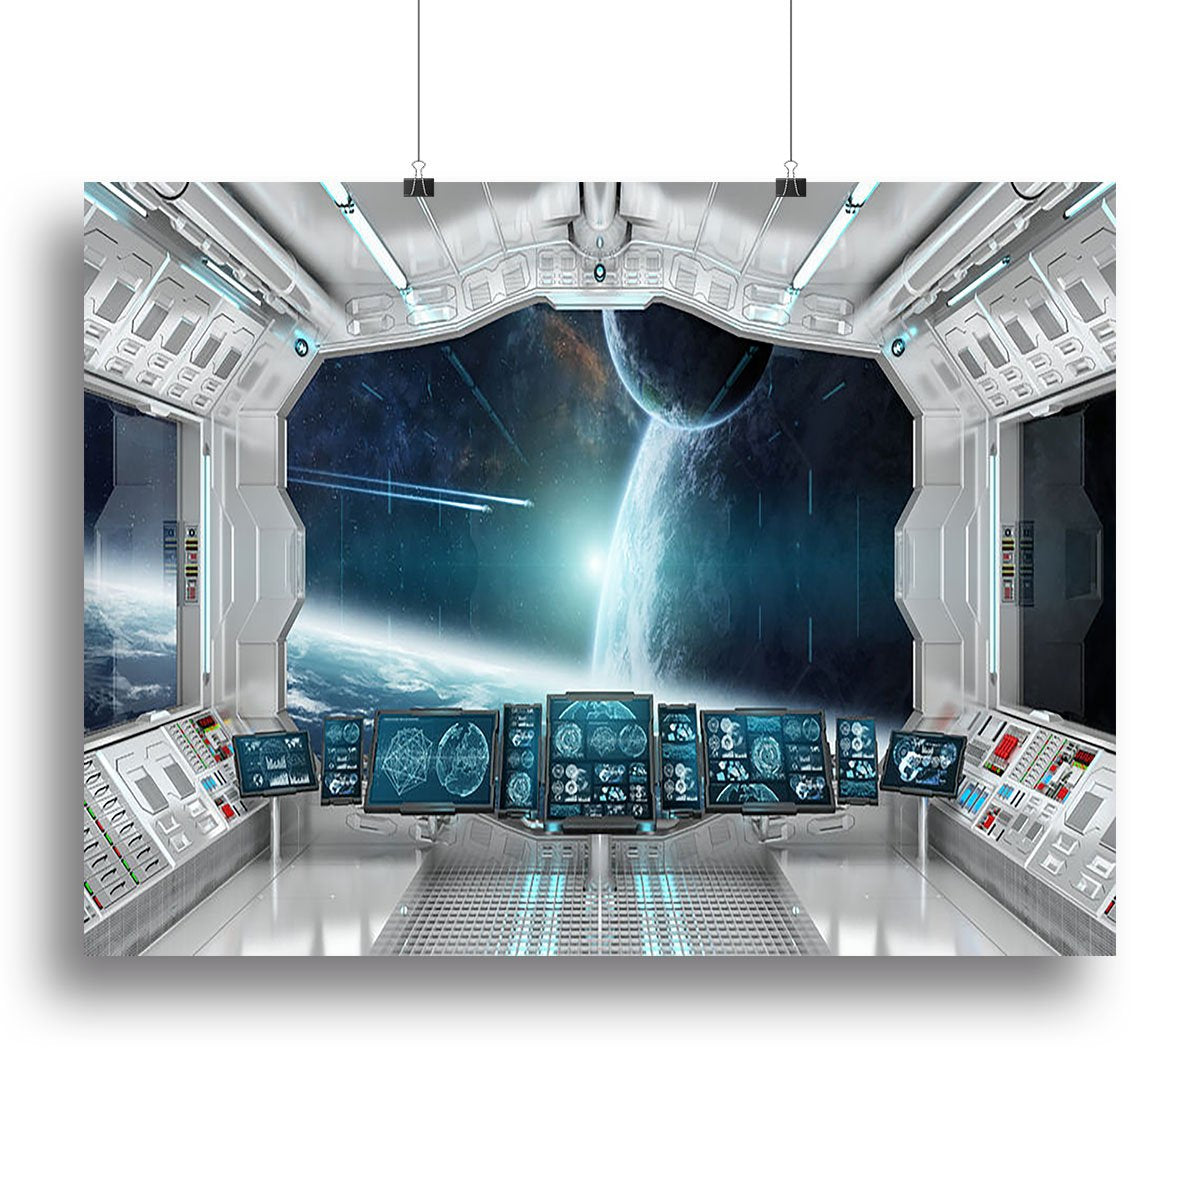 Spaceship Control Center Canvas Print or Poster